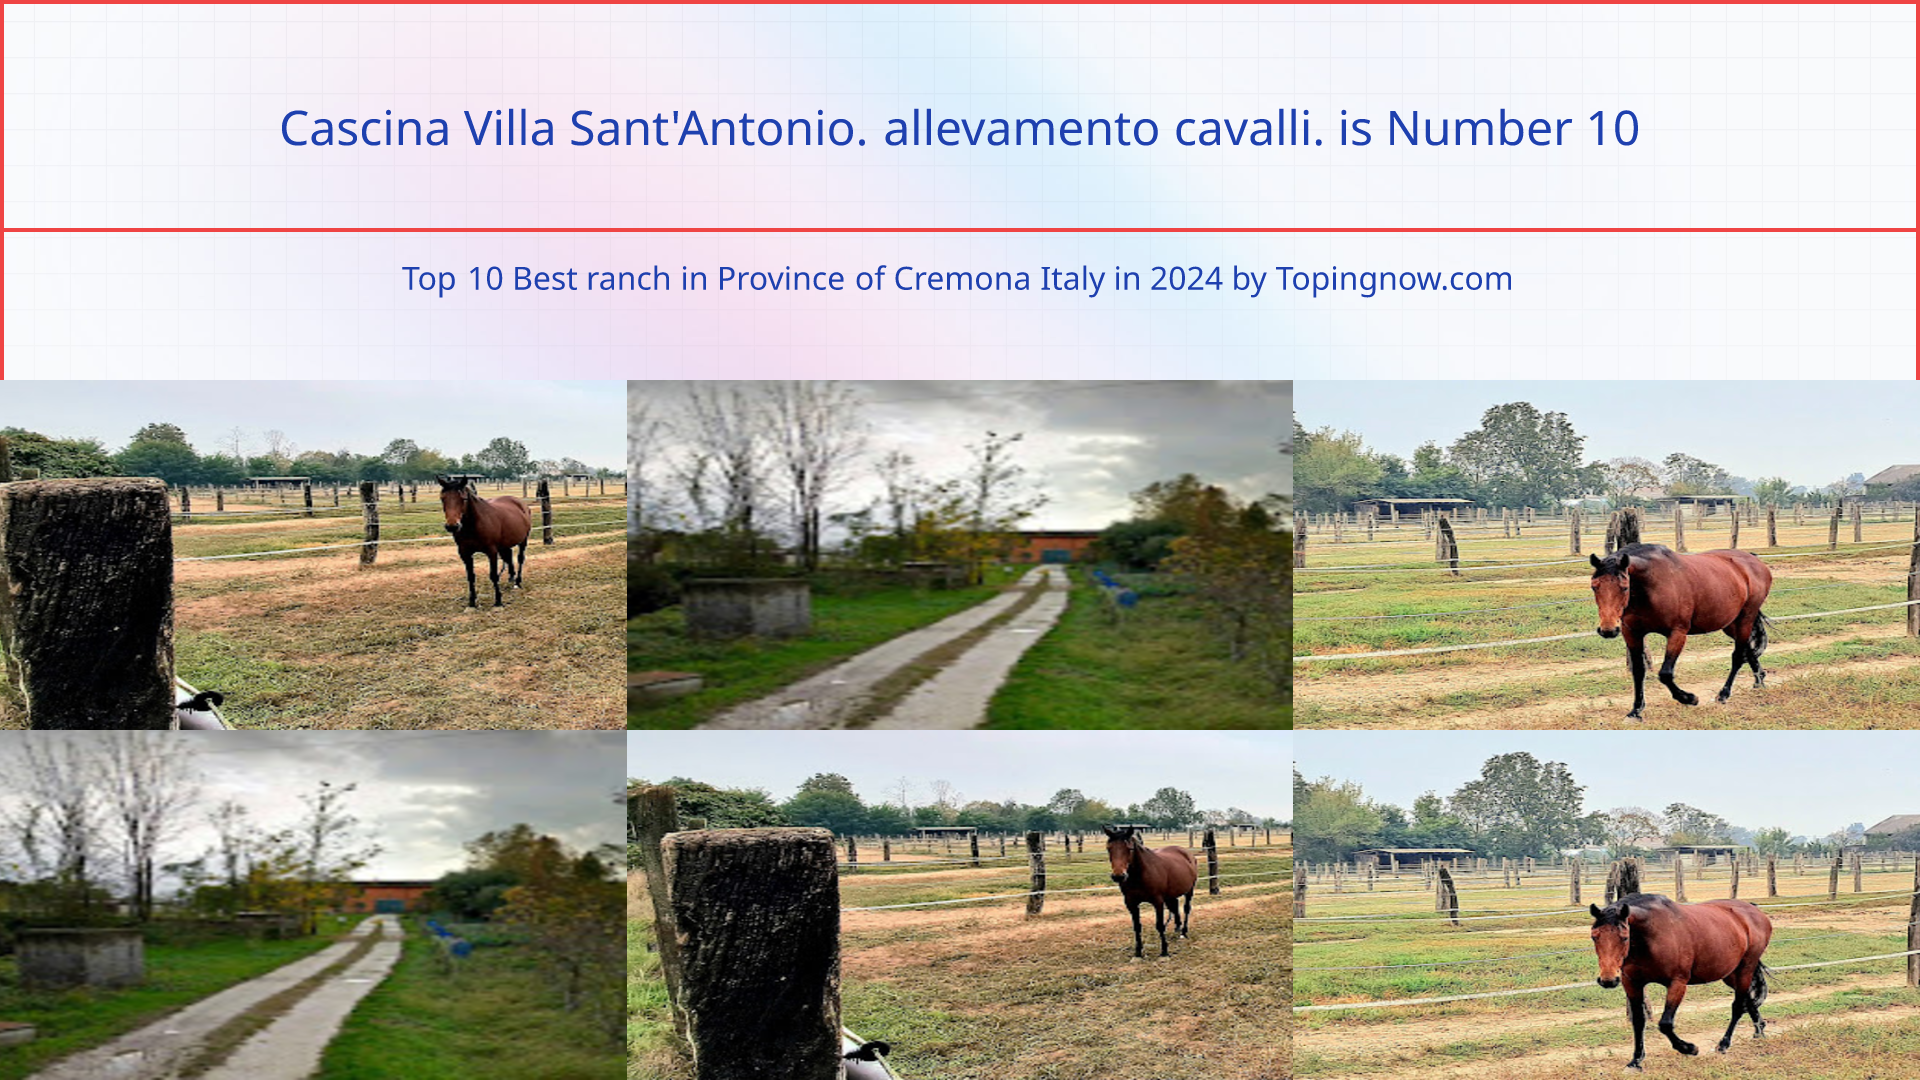 Cascina Villa Sant'Antonio. allevamento cavalli.: Top 10 Best ranch in Province of Cremona Italy in 2024